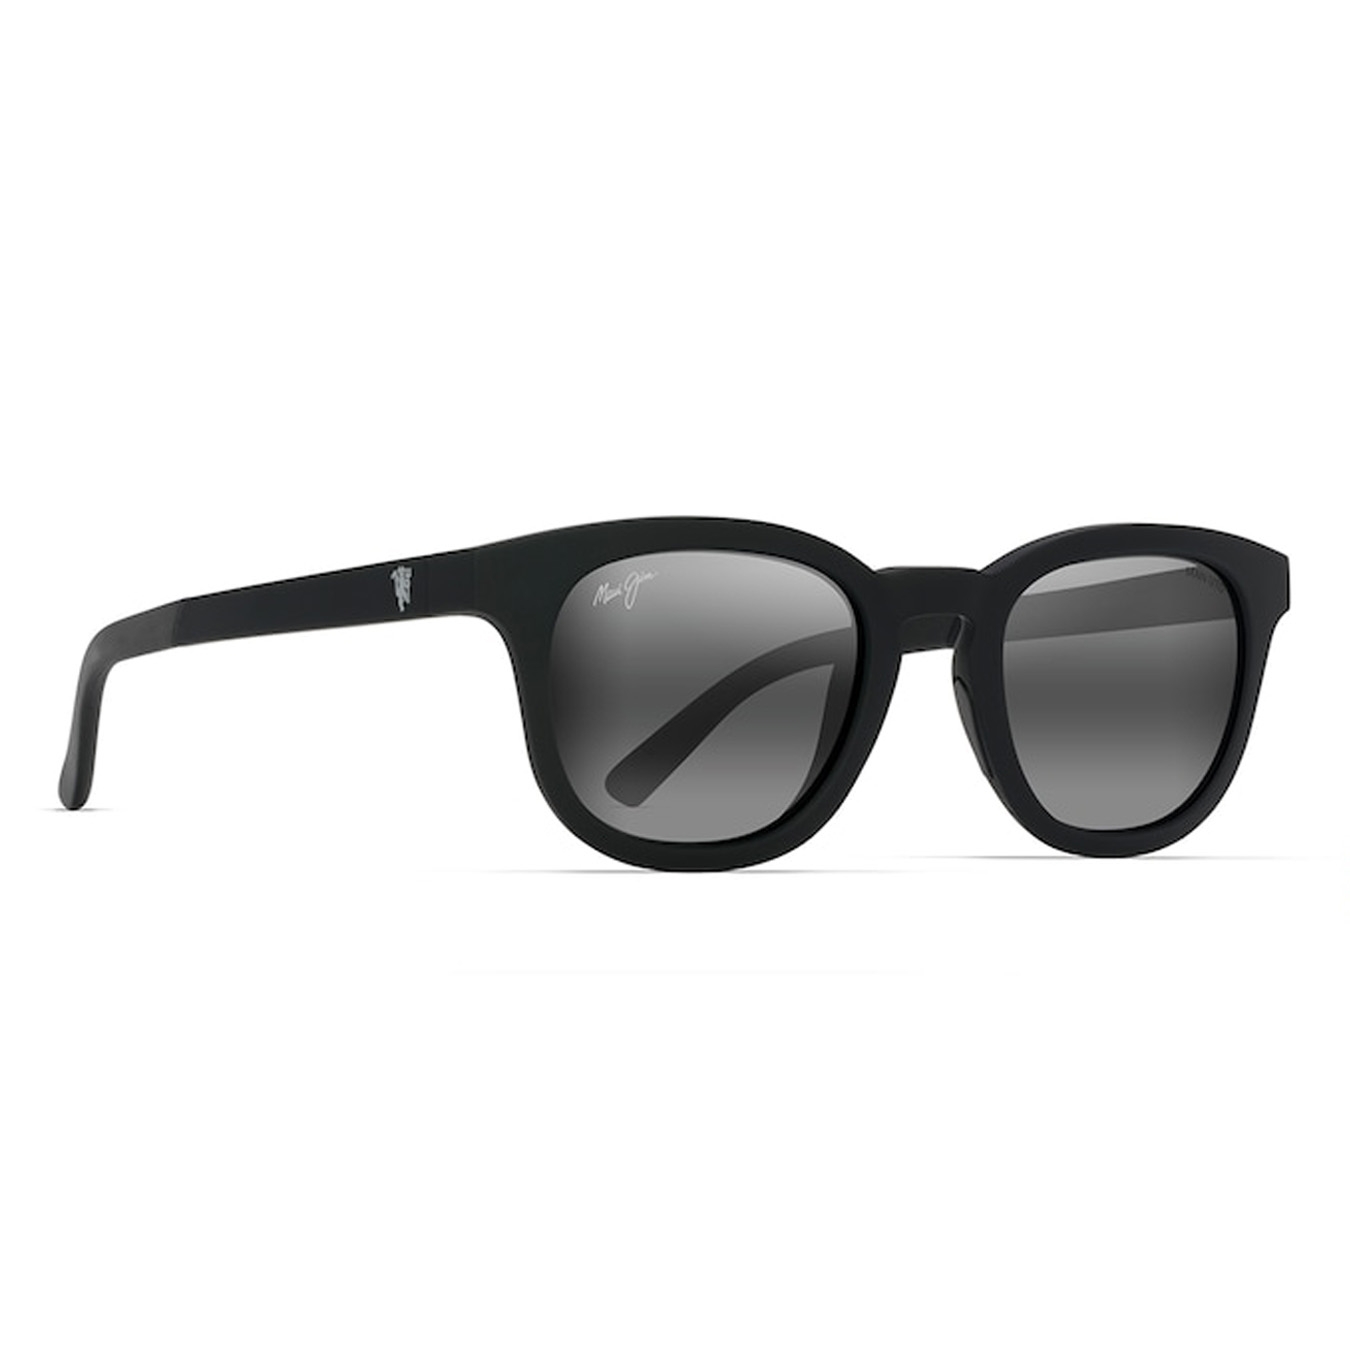 Koko Head Polarized Classic Sunglasses